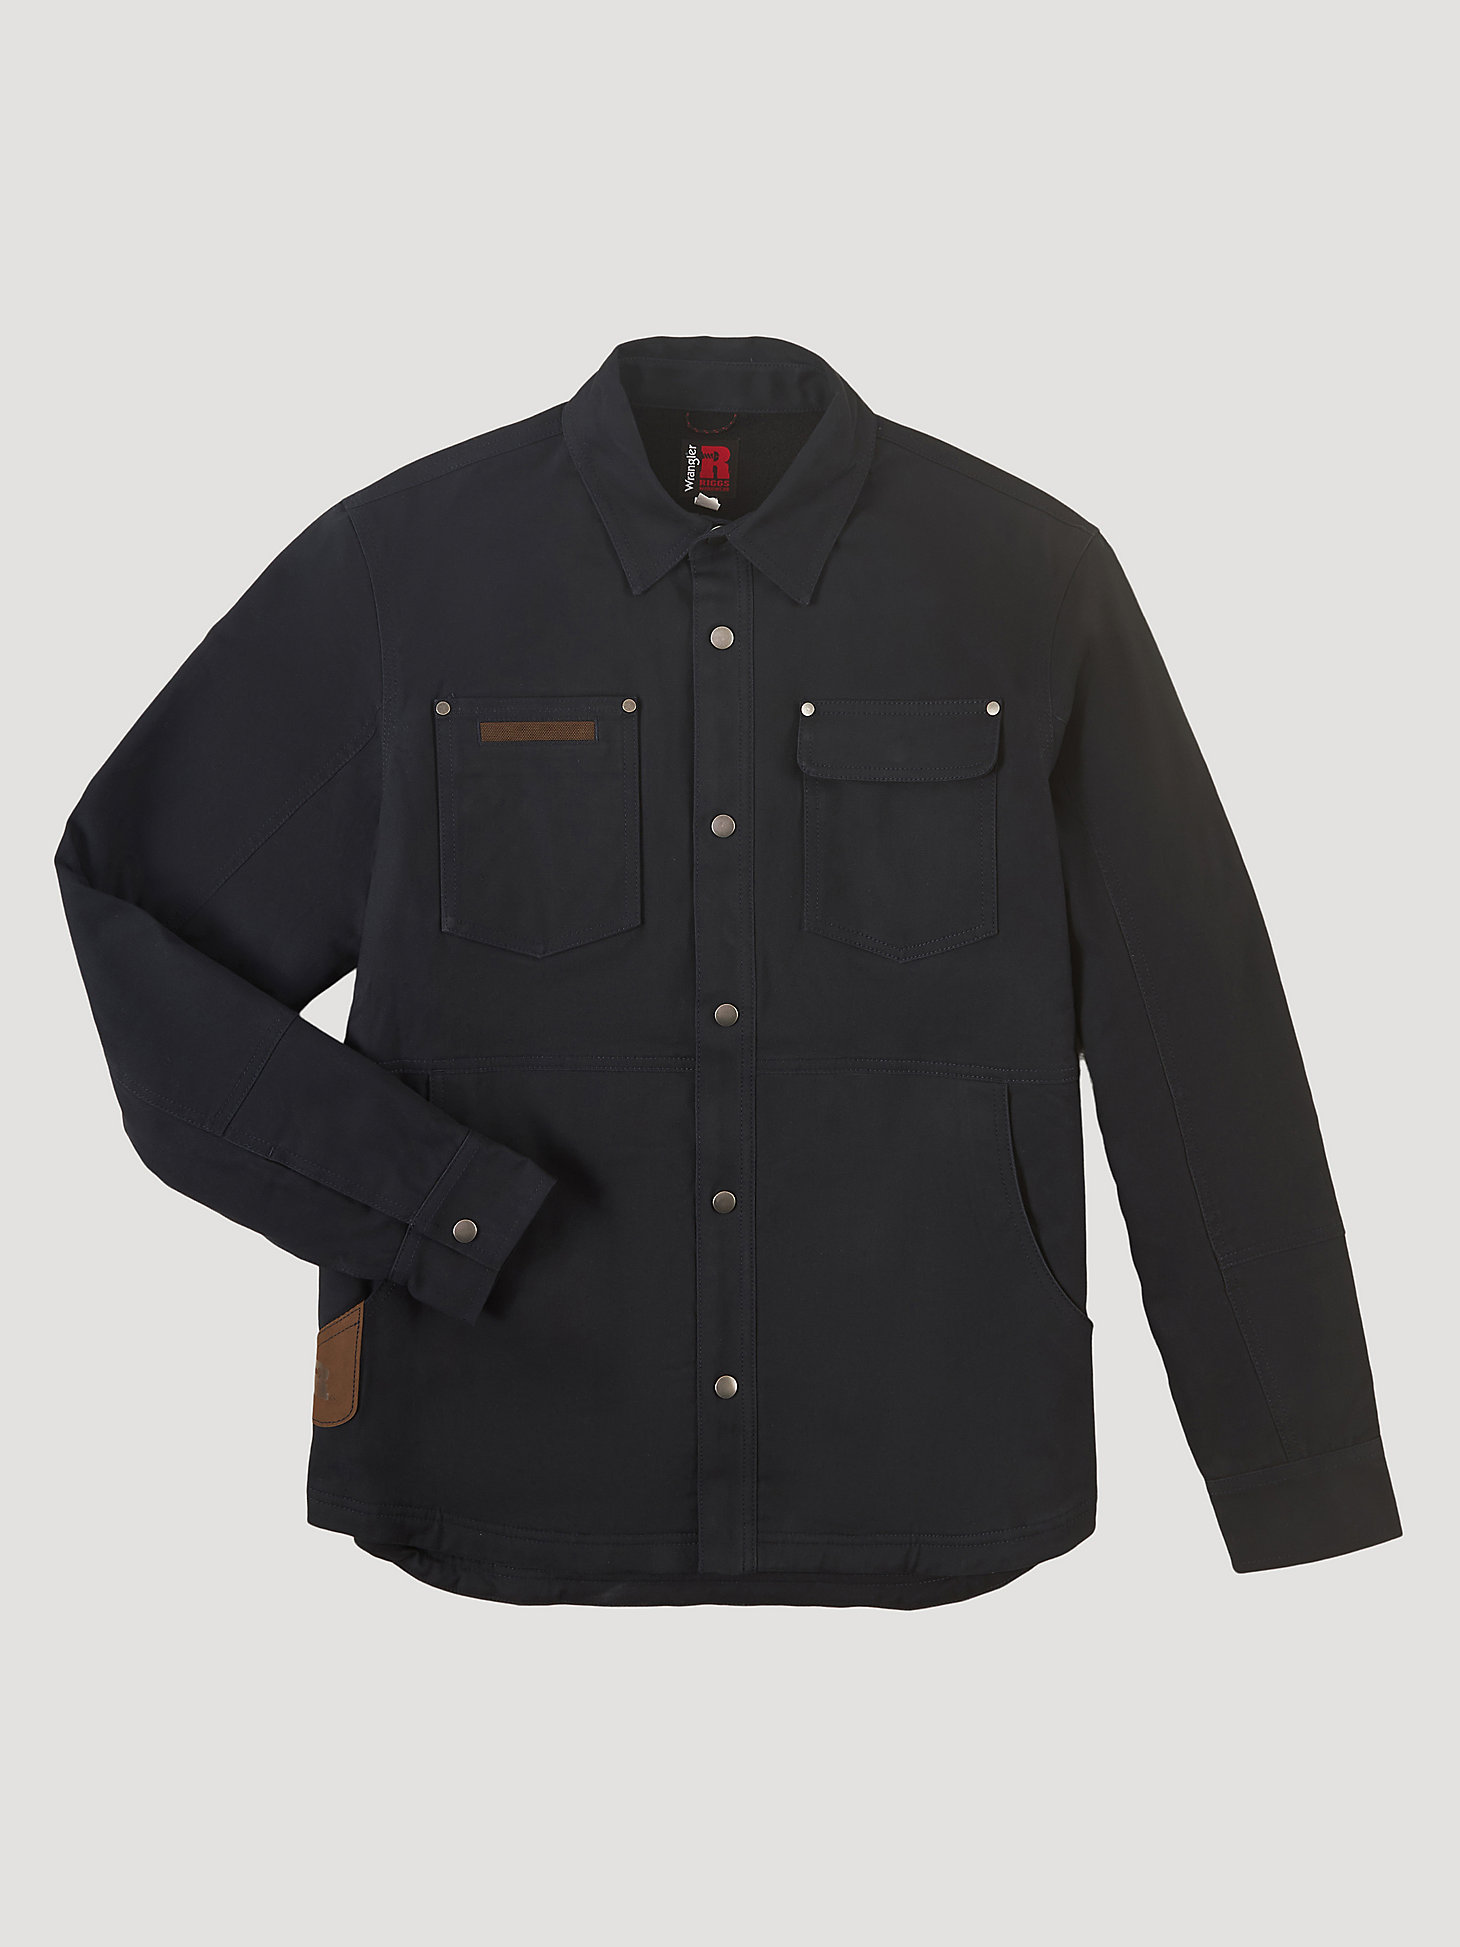 Wrangler® RIGGS Workwear® Tough Layers Fleece Lined Work Shirt Jacket in Dark Navy alternative view 5